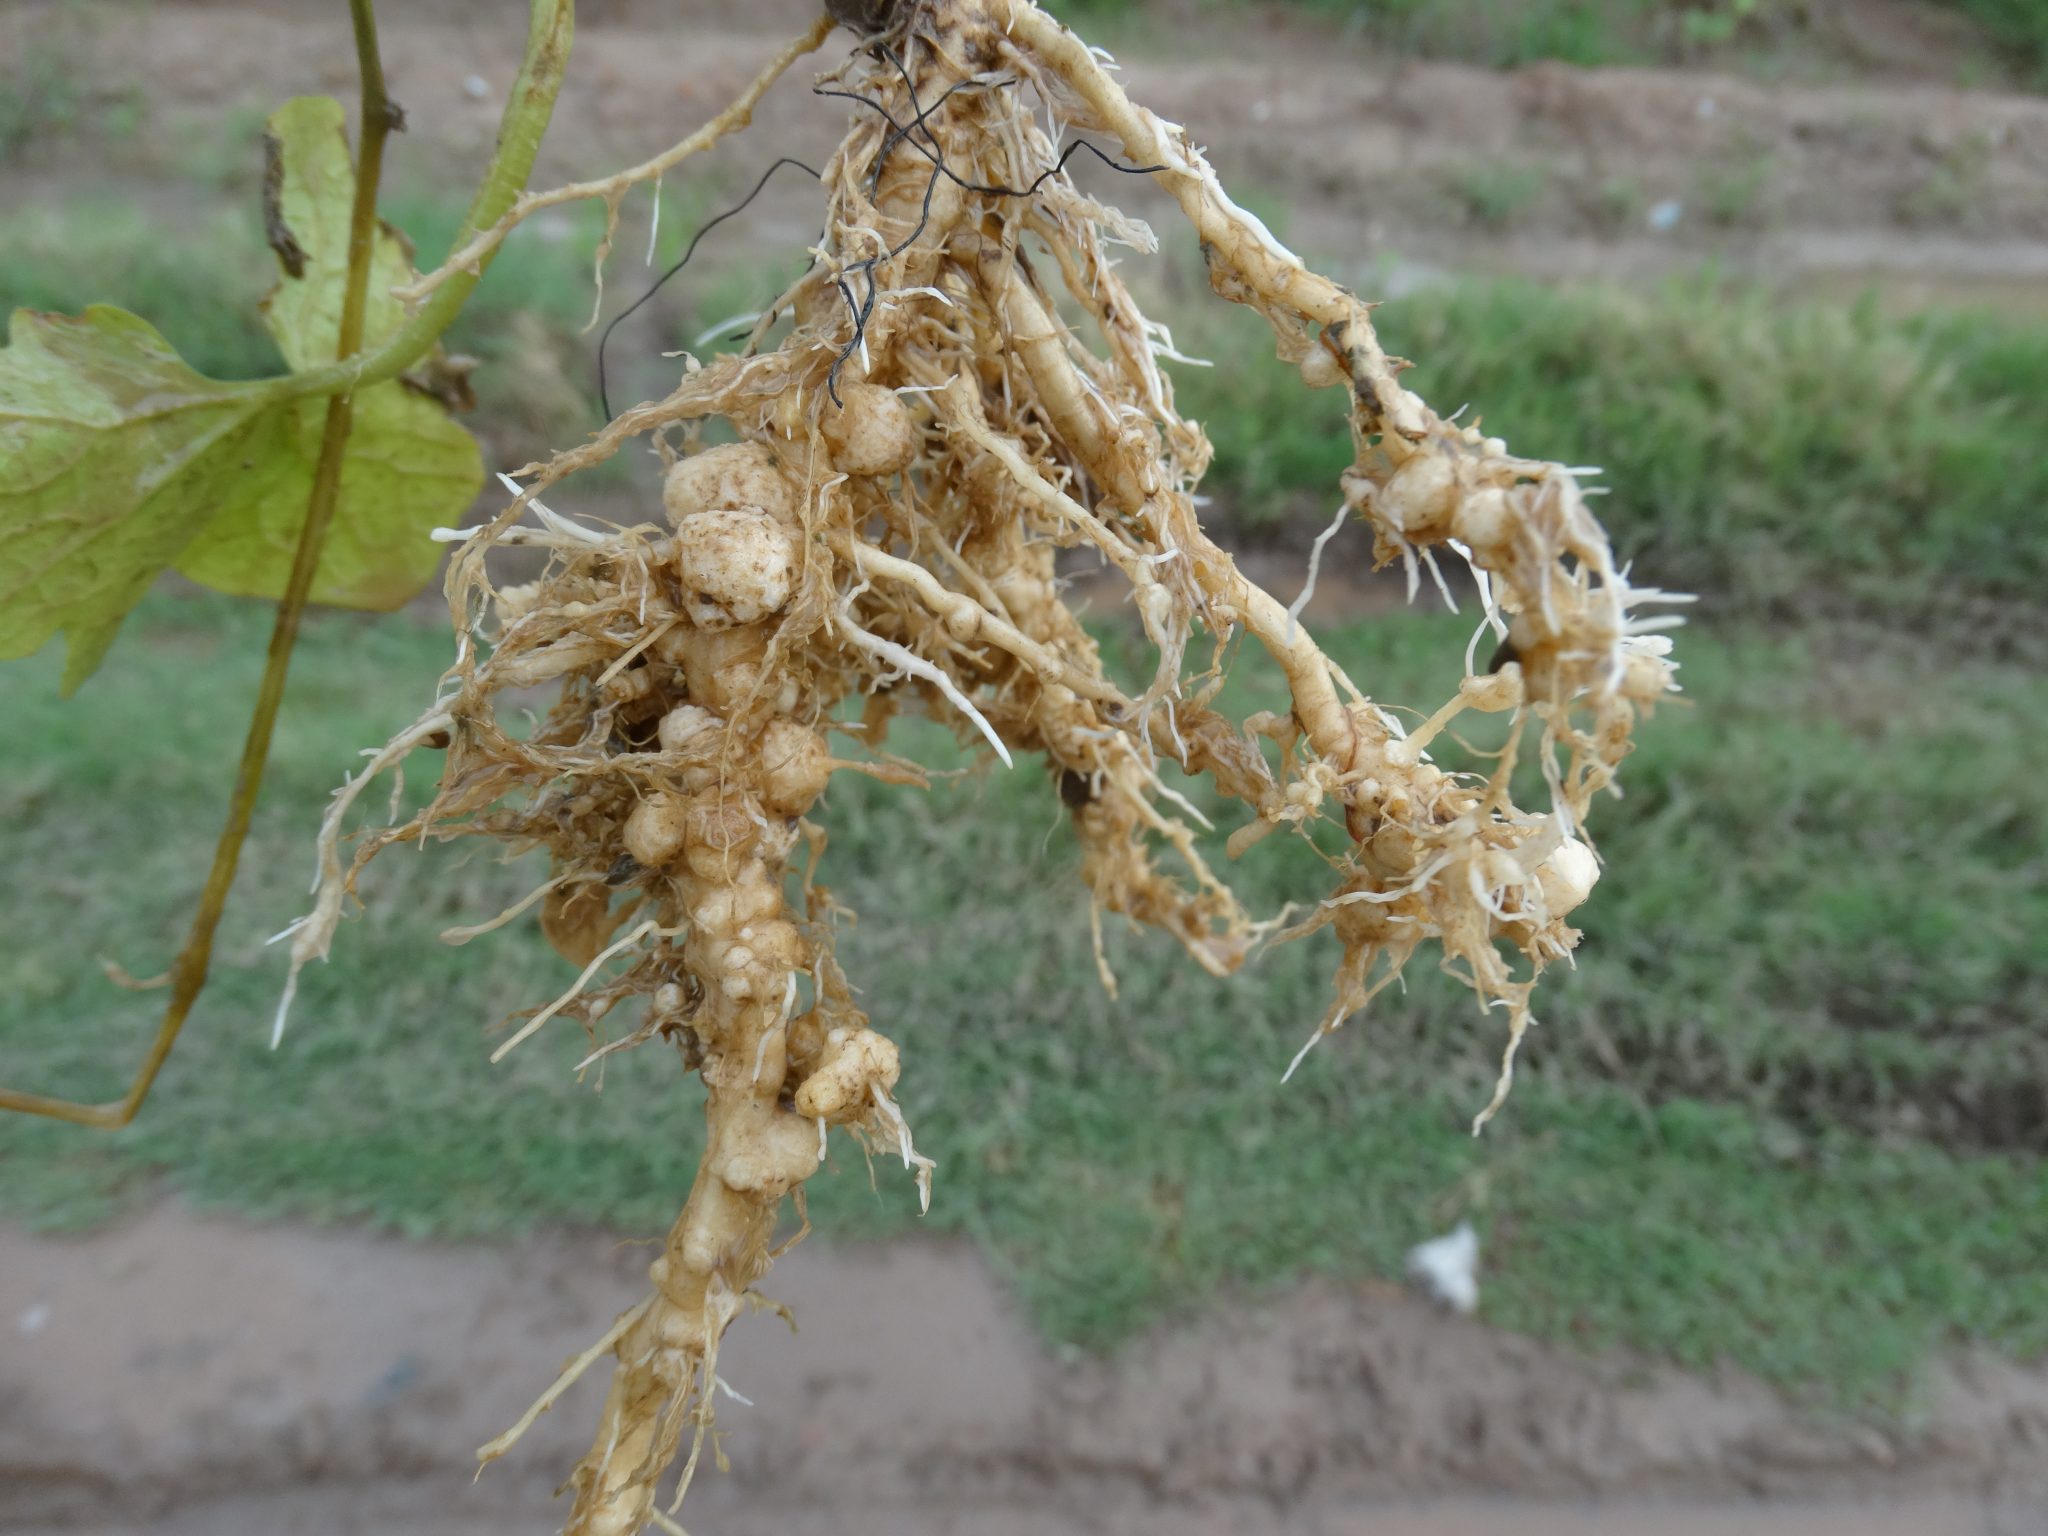 Nematodes and Turf Problems - Plant & Pest Diagnostics